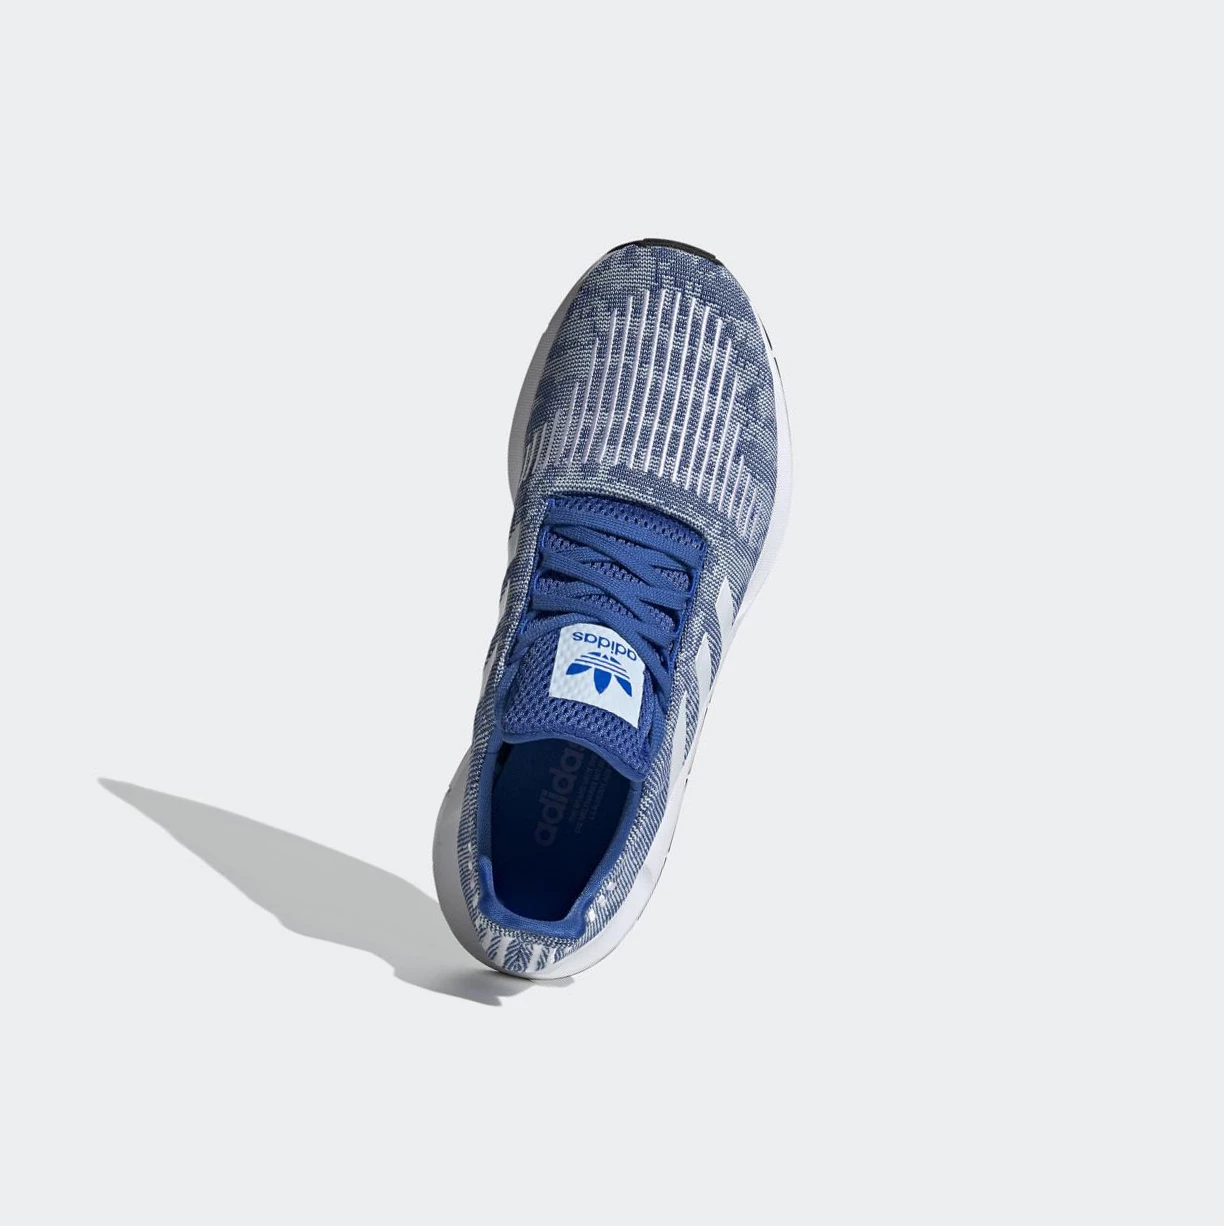 Originálne Topánky Adidas Swift Run Damske Modre | 786SKTJBEAR